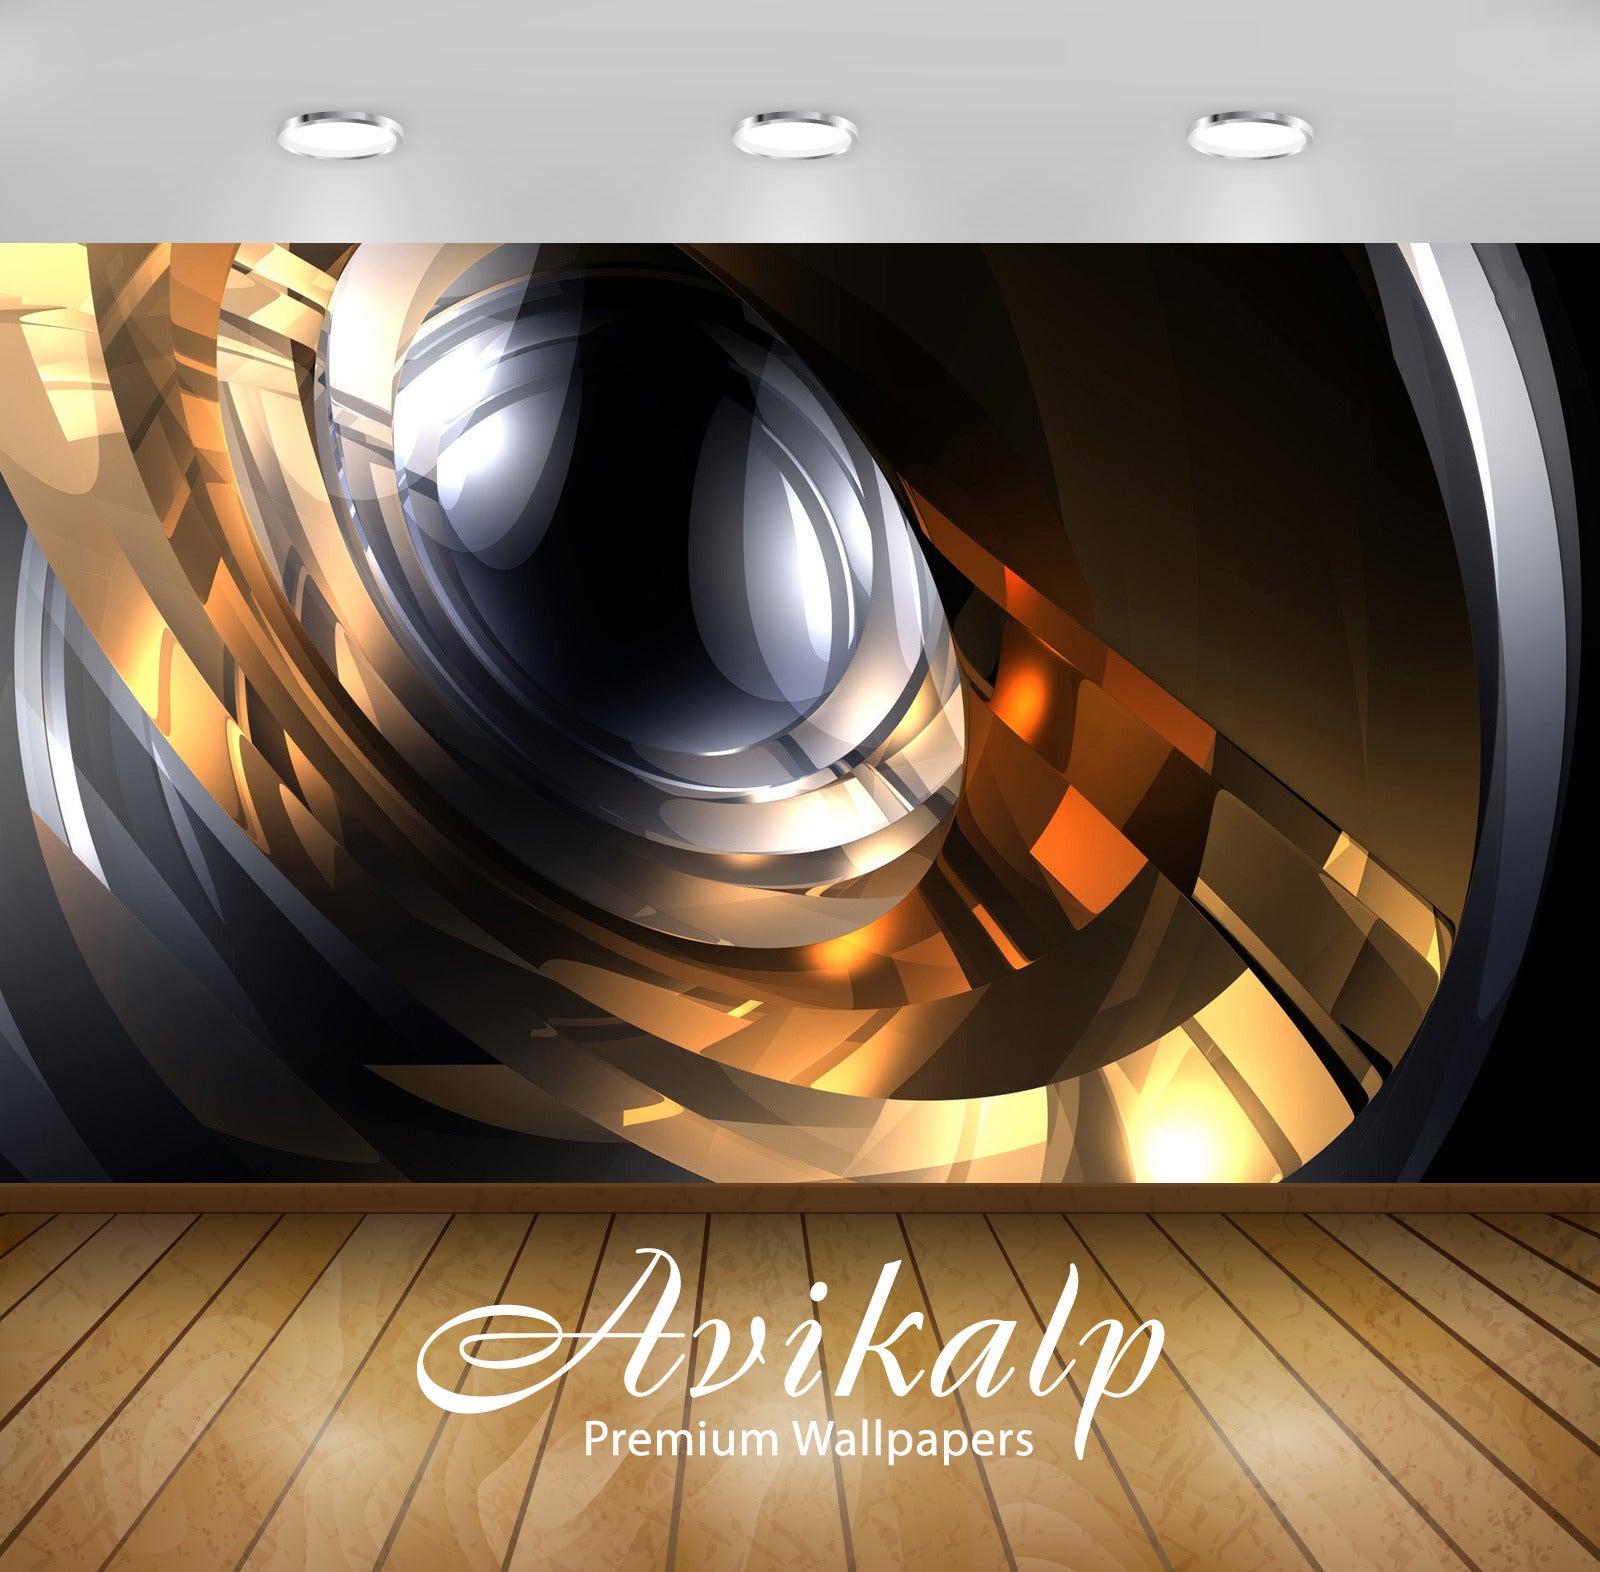 Avikalp Exclusive Awi4305 Eye Full HD Wallpapers for Living room, Hall, Kids Room, Kitchen, TV Backg